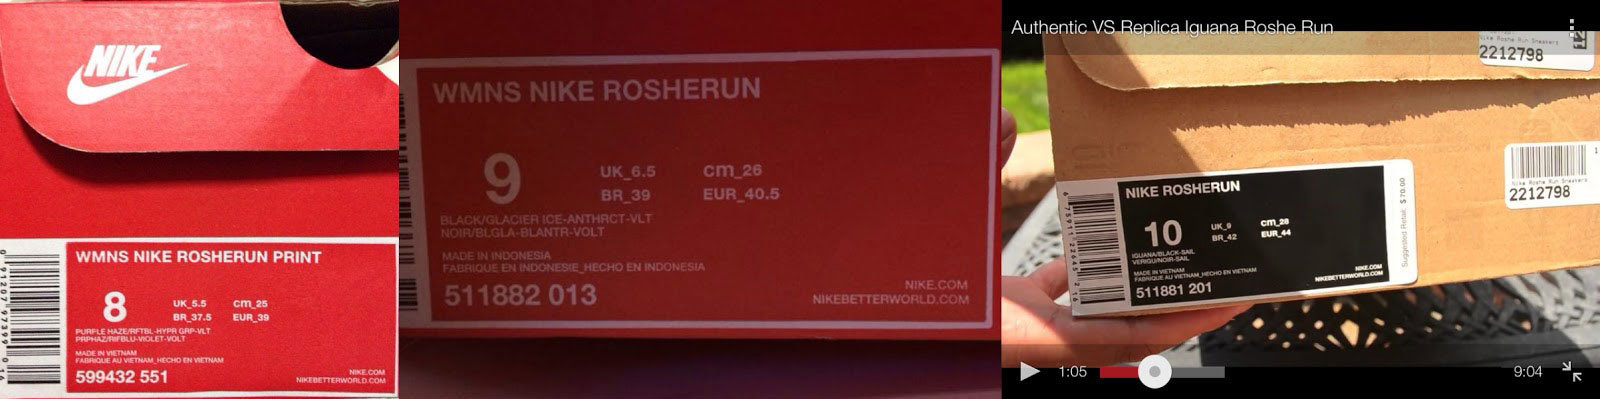 Информация на коробке фирменных кроссовок Nike Roshe One